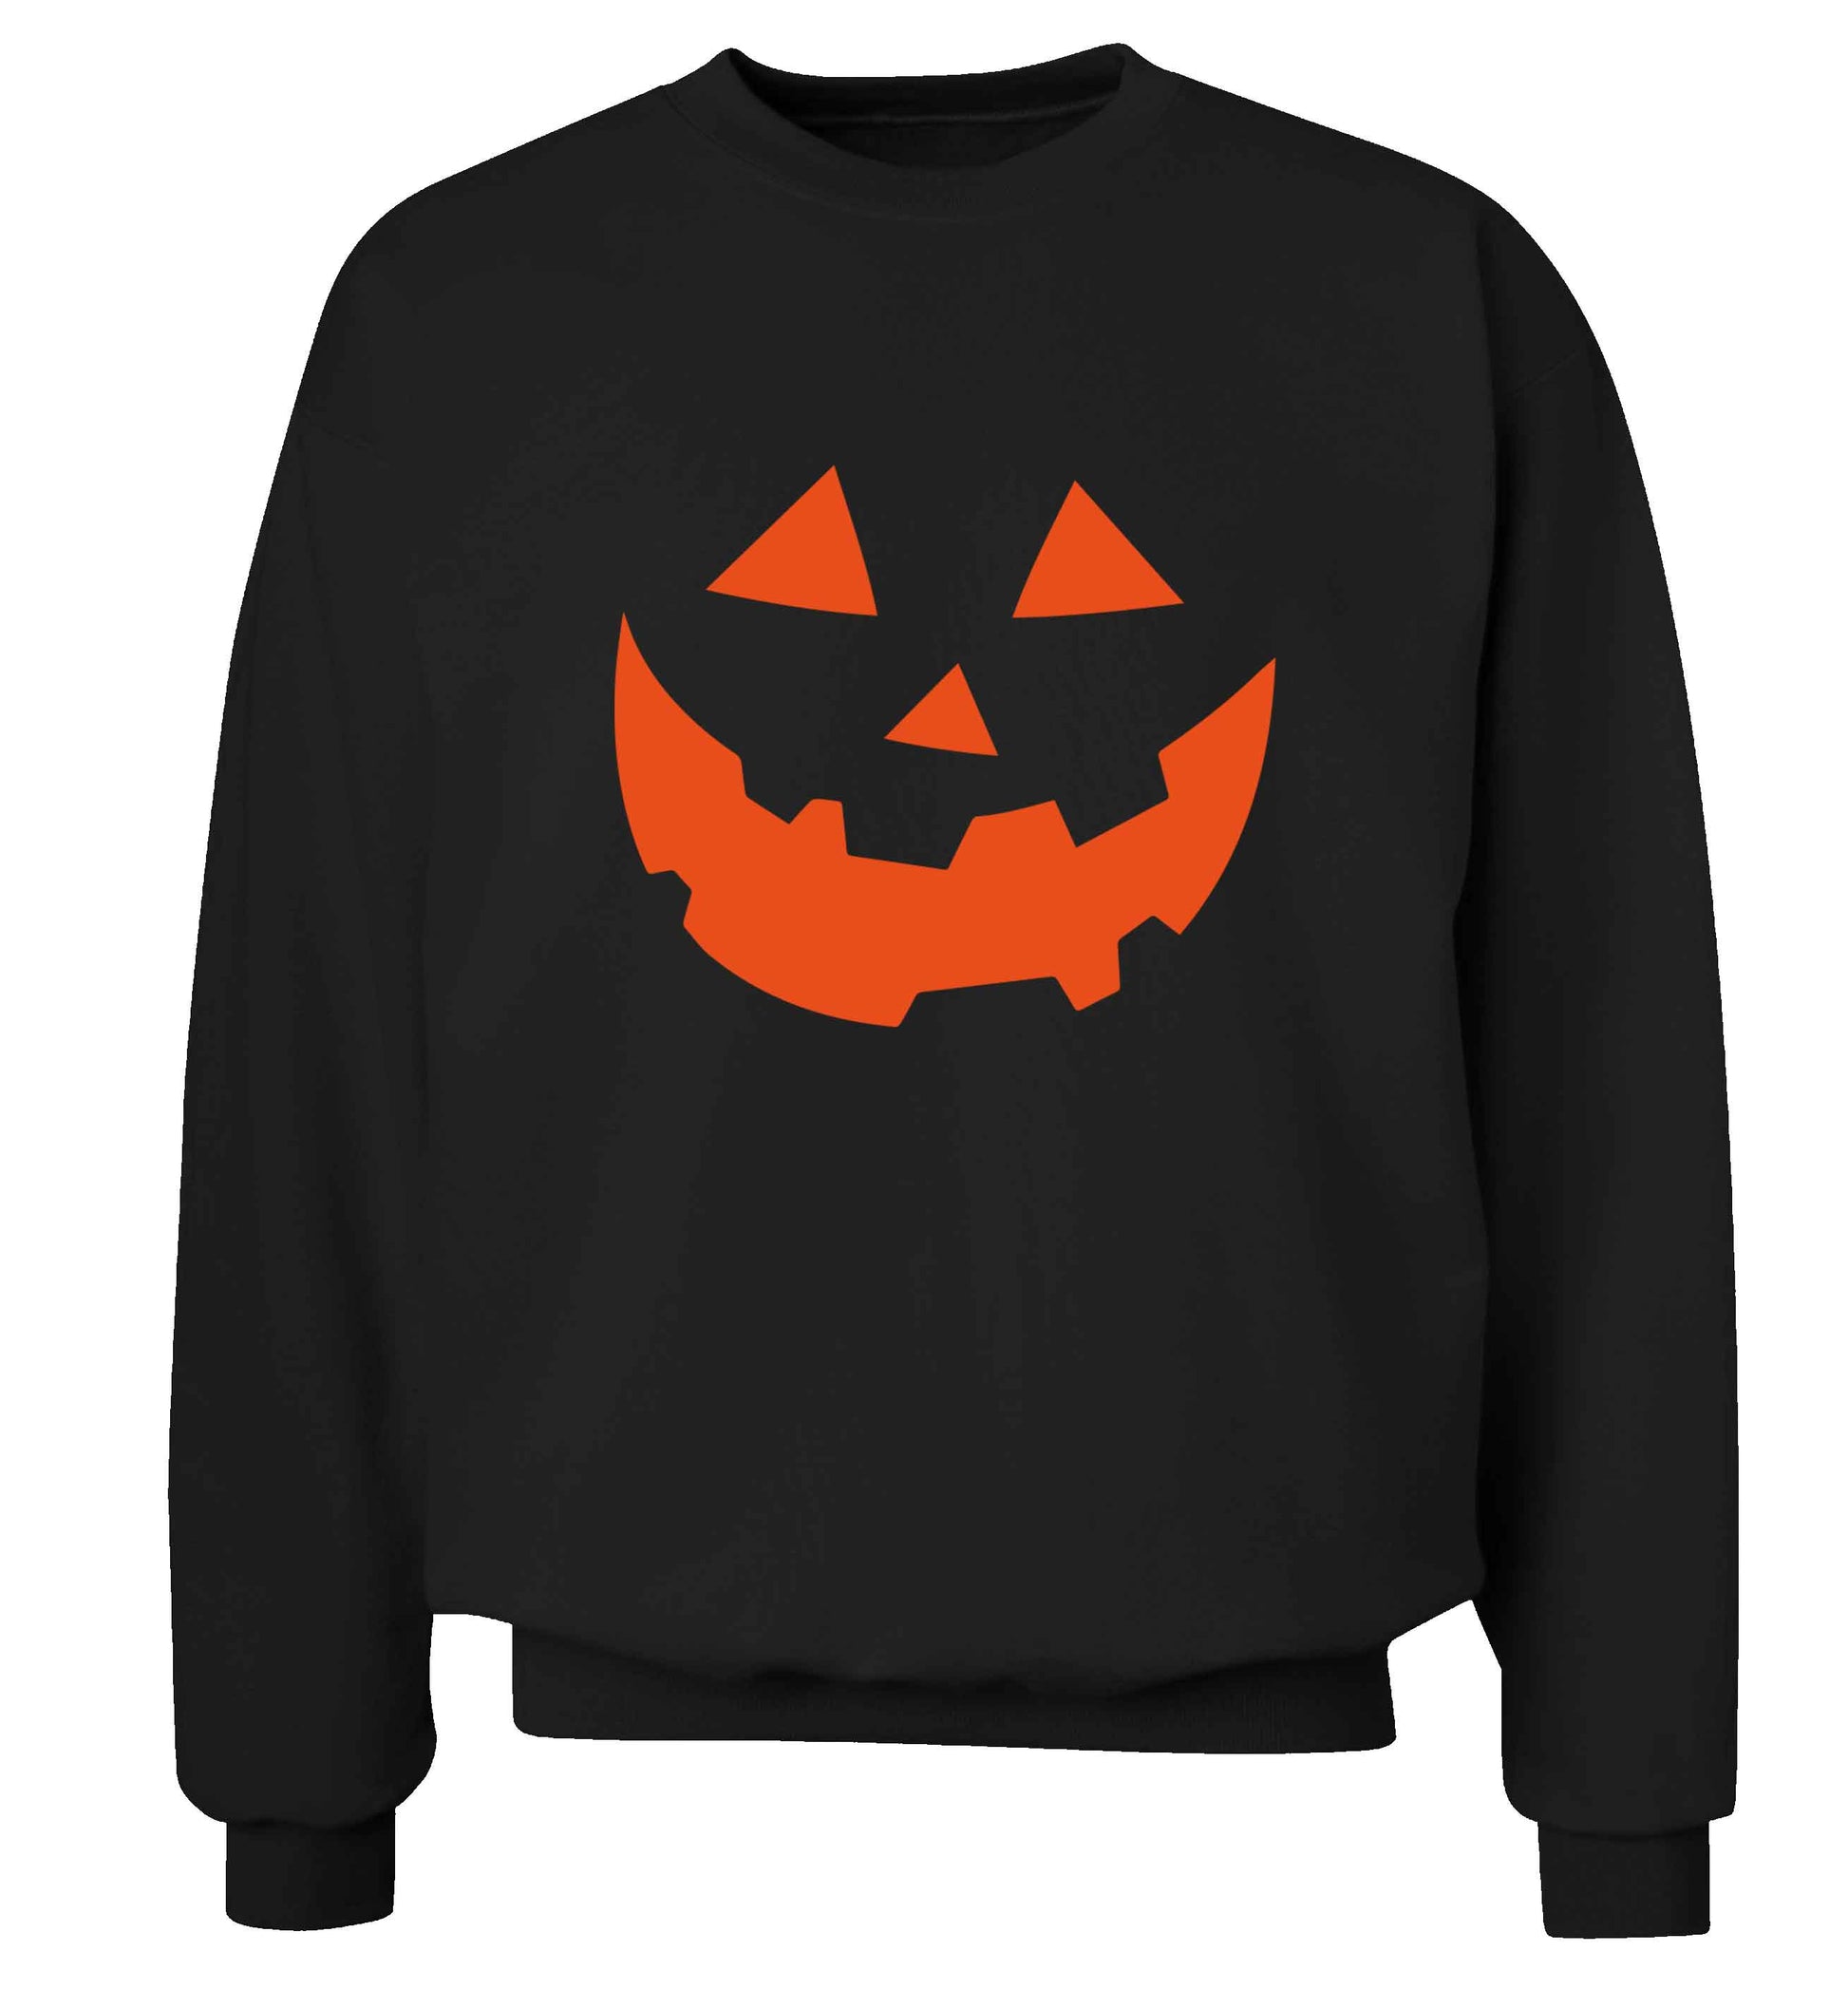 Pumpkin Spice Nice adult's unisex black sweater 2XL